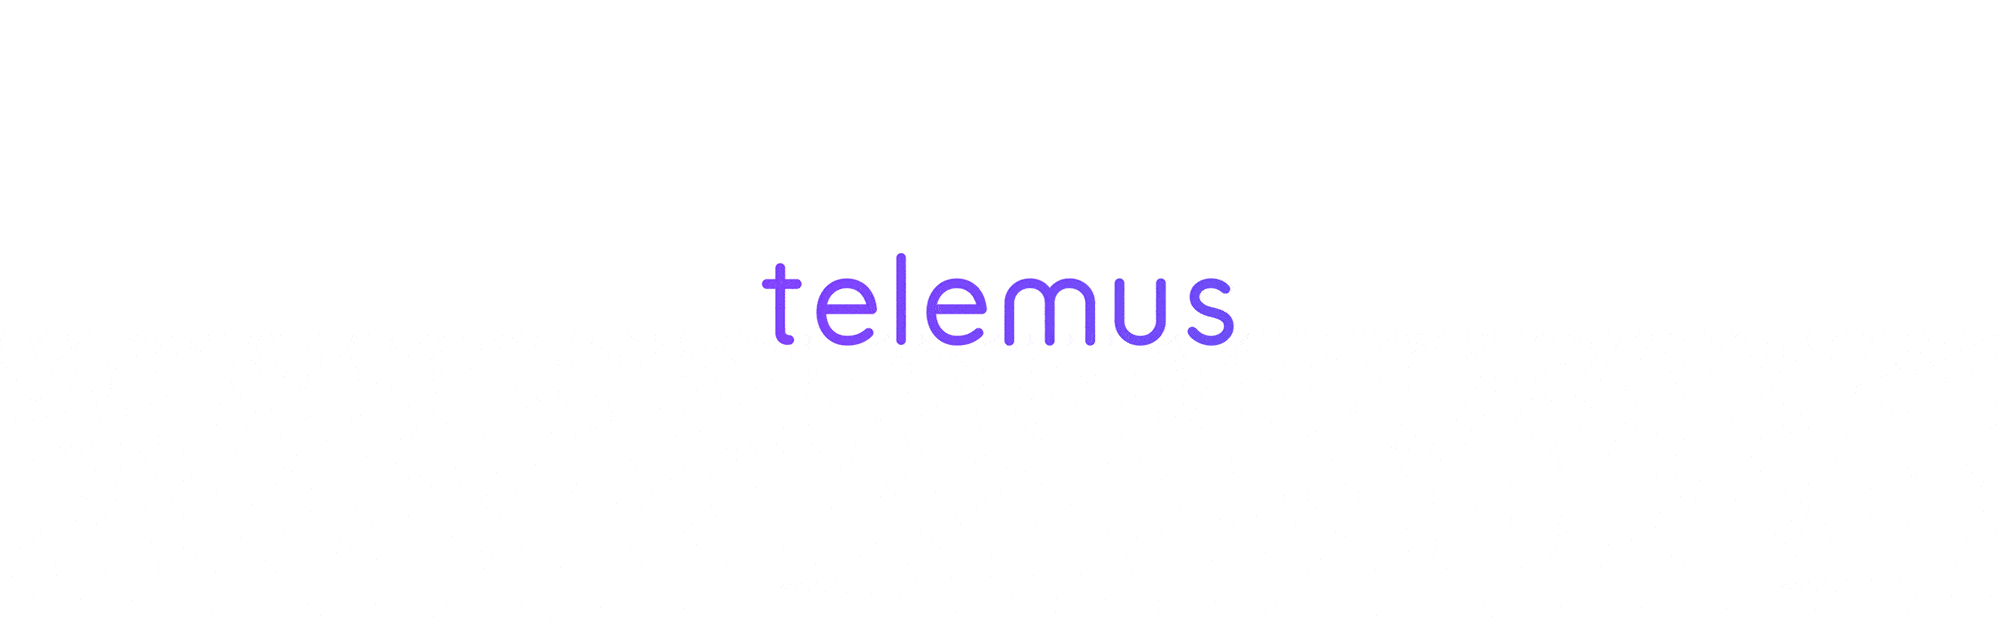 13-telemus_Large_White